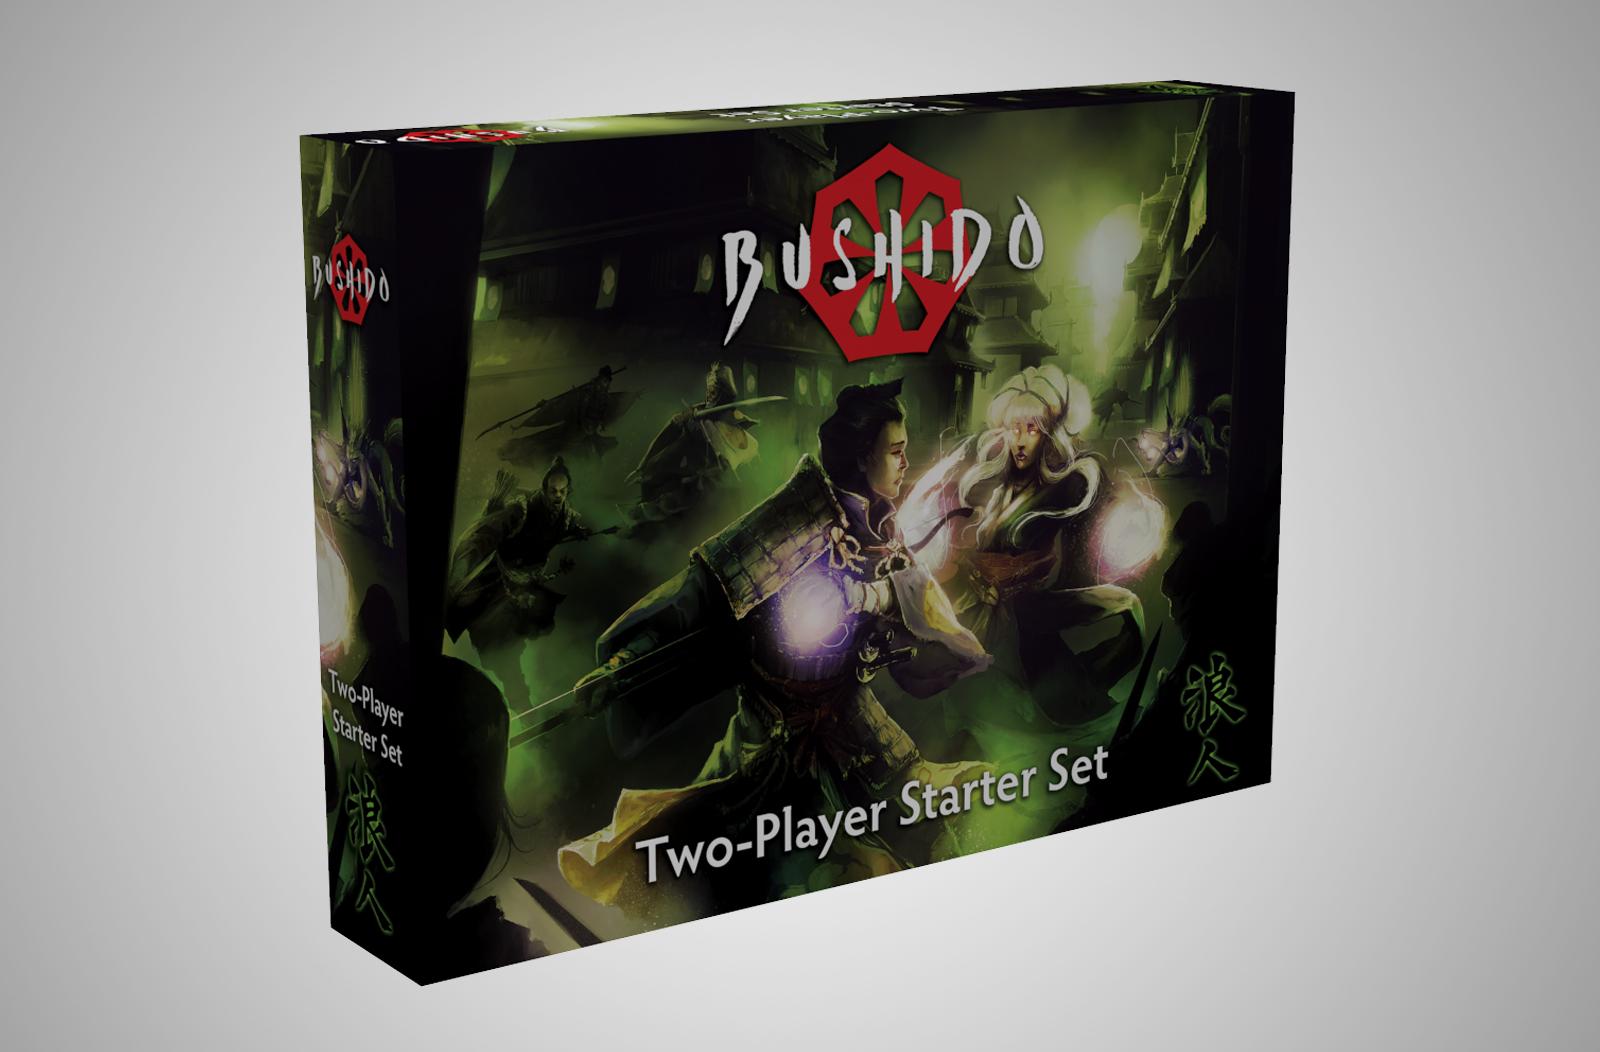 BUSHIDO RISORTA sole due Player Starter Set GCT Studios Nuovo di Zecca GCT-B2SS001/19 